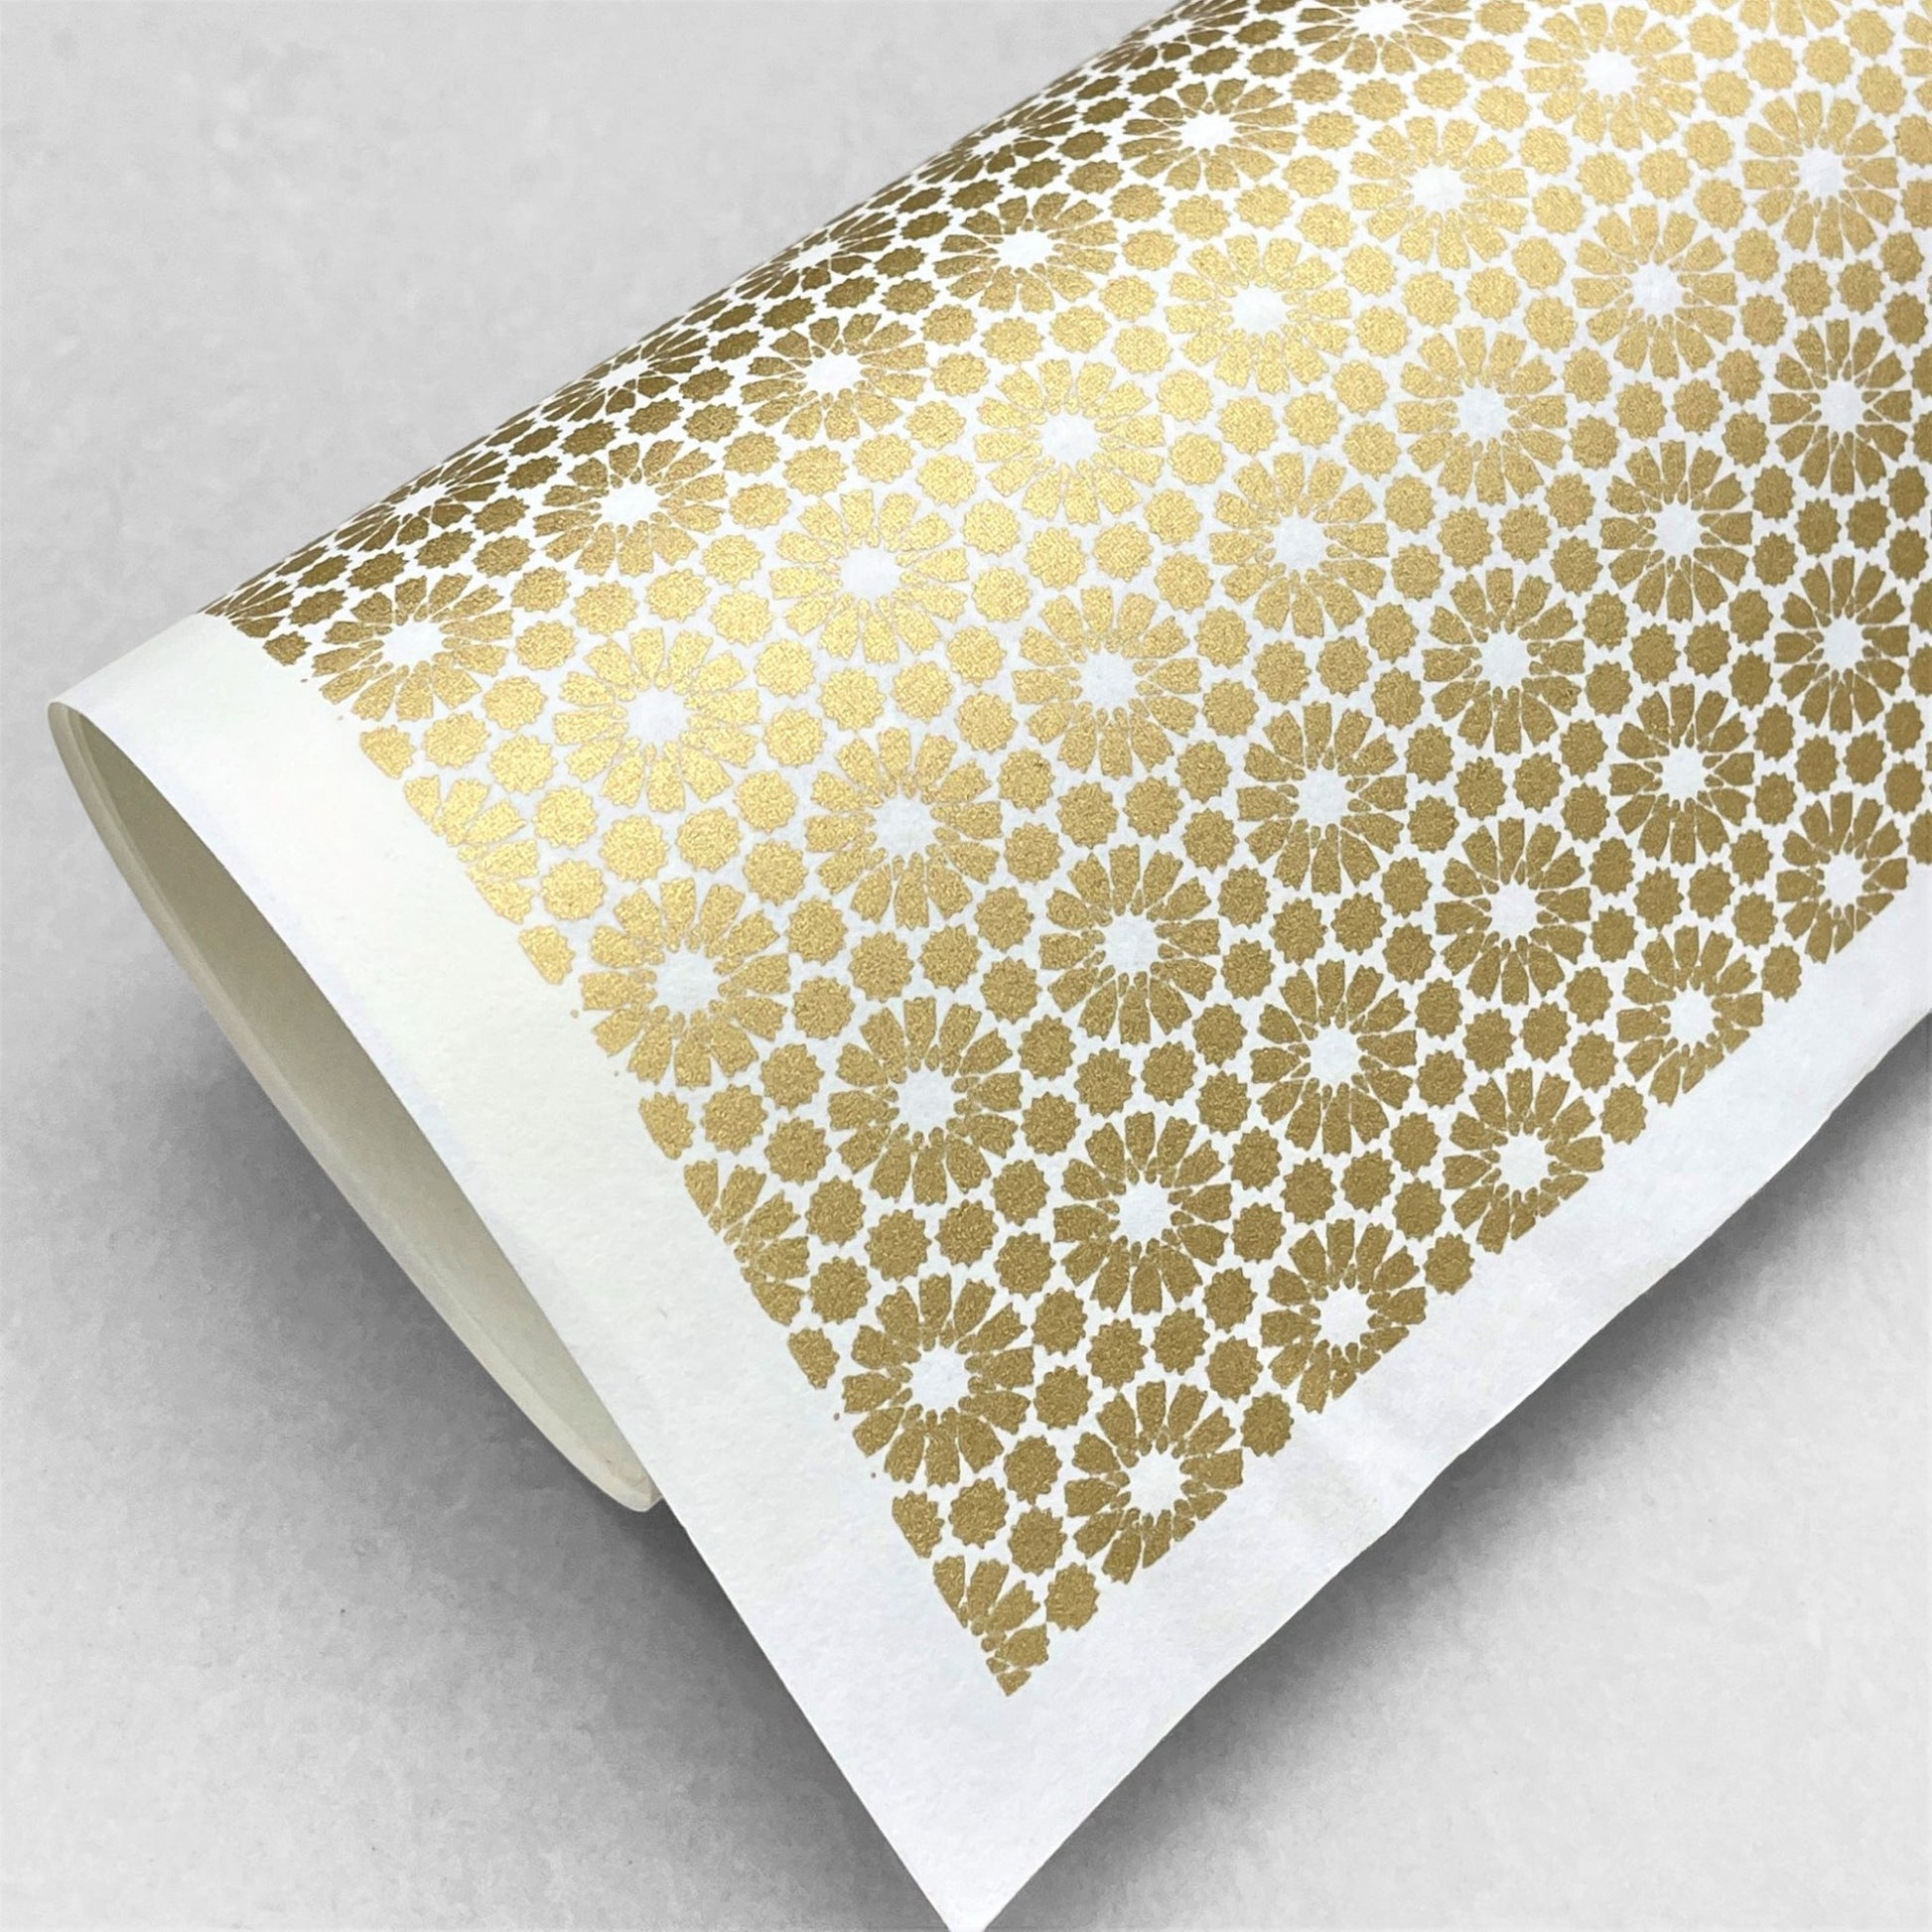 japanese silk-screen handmade paper showing gold repeat chrysanthemum flower motif repeat